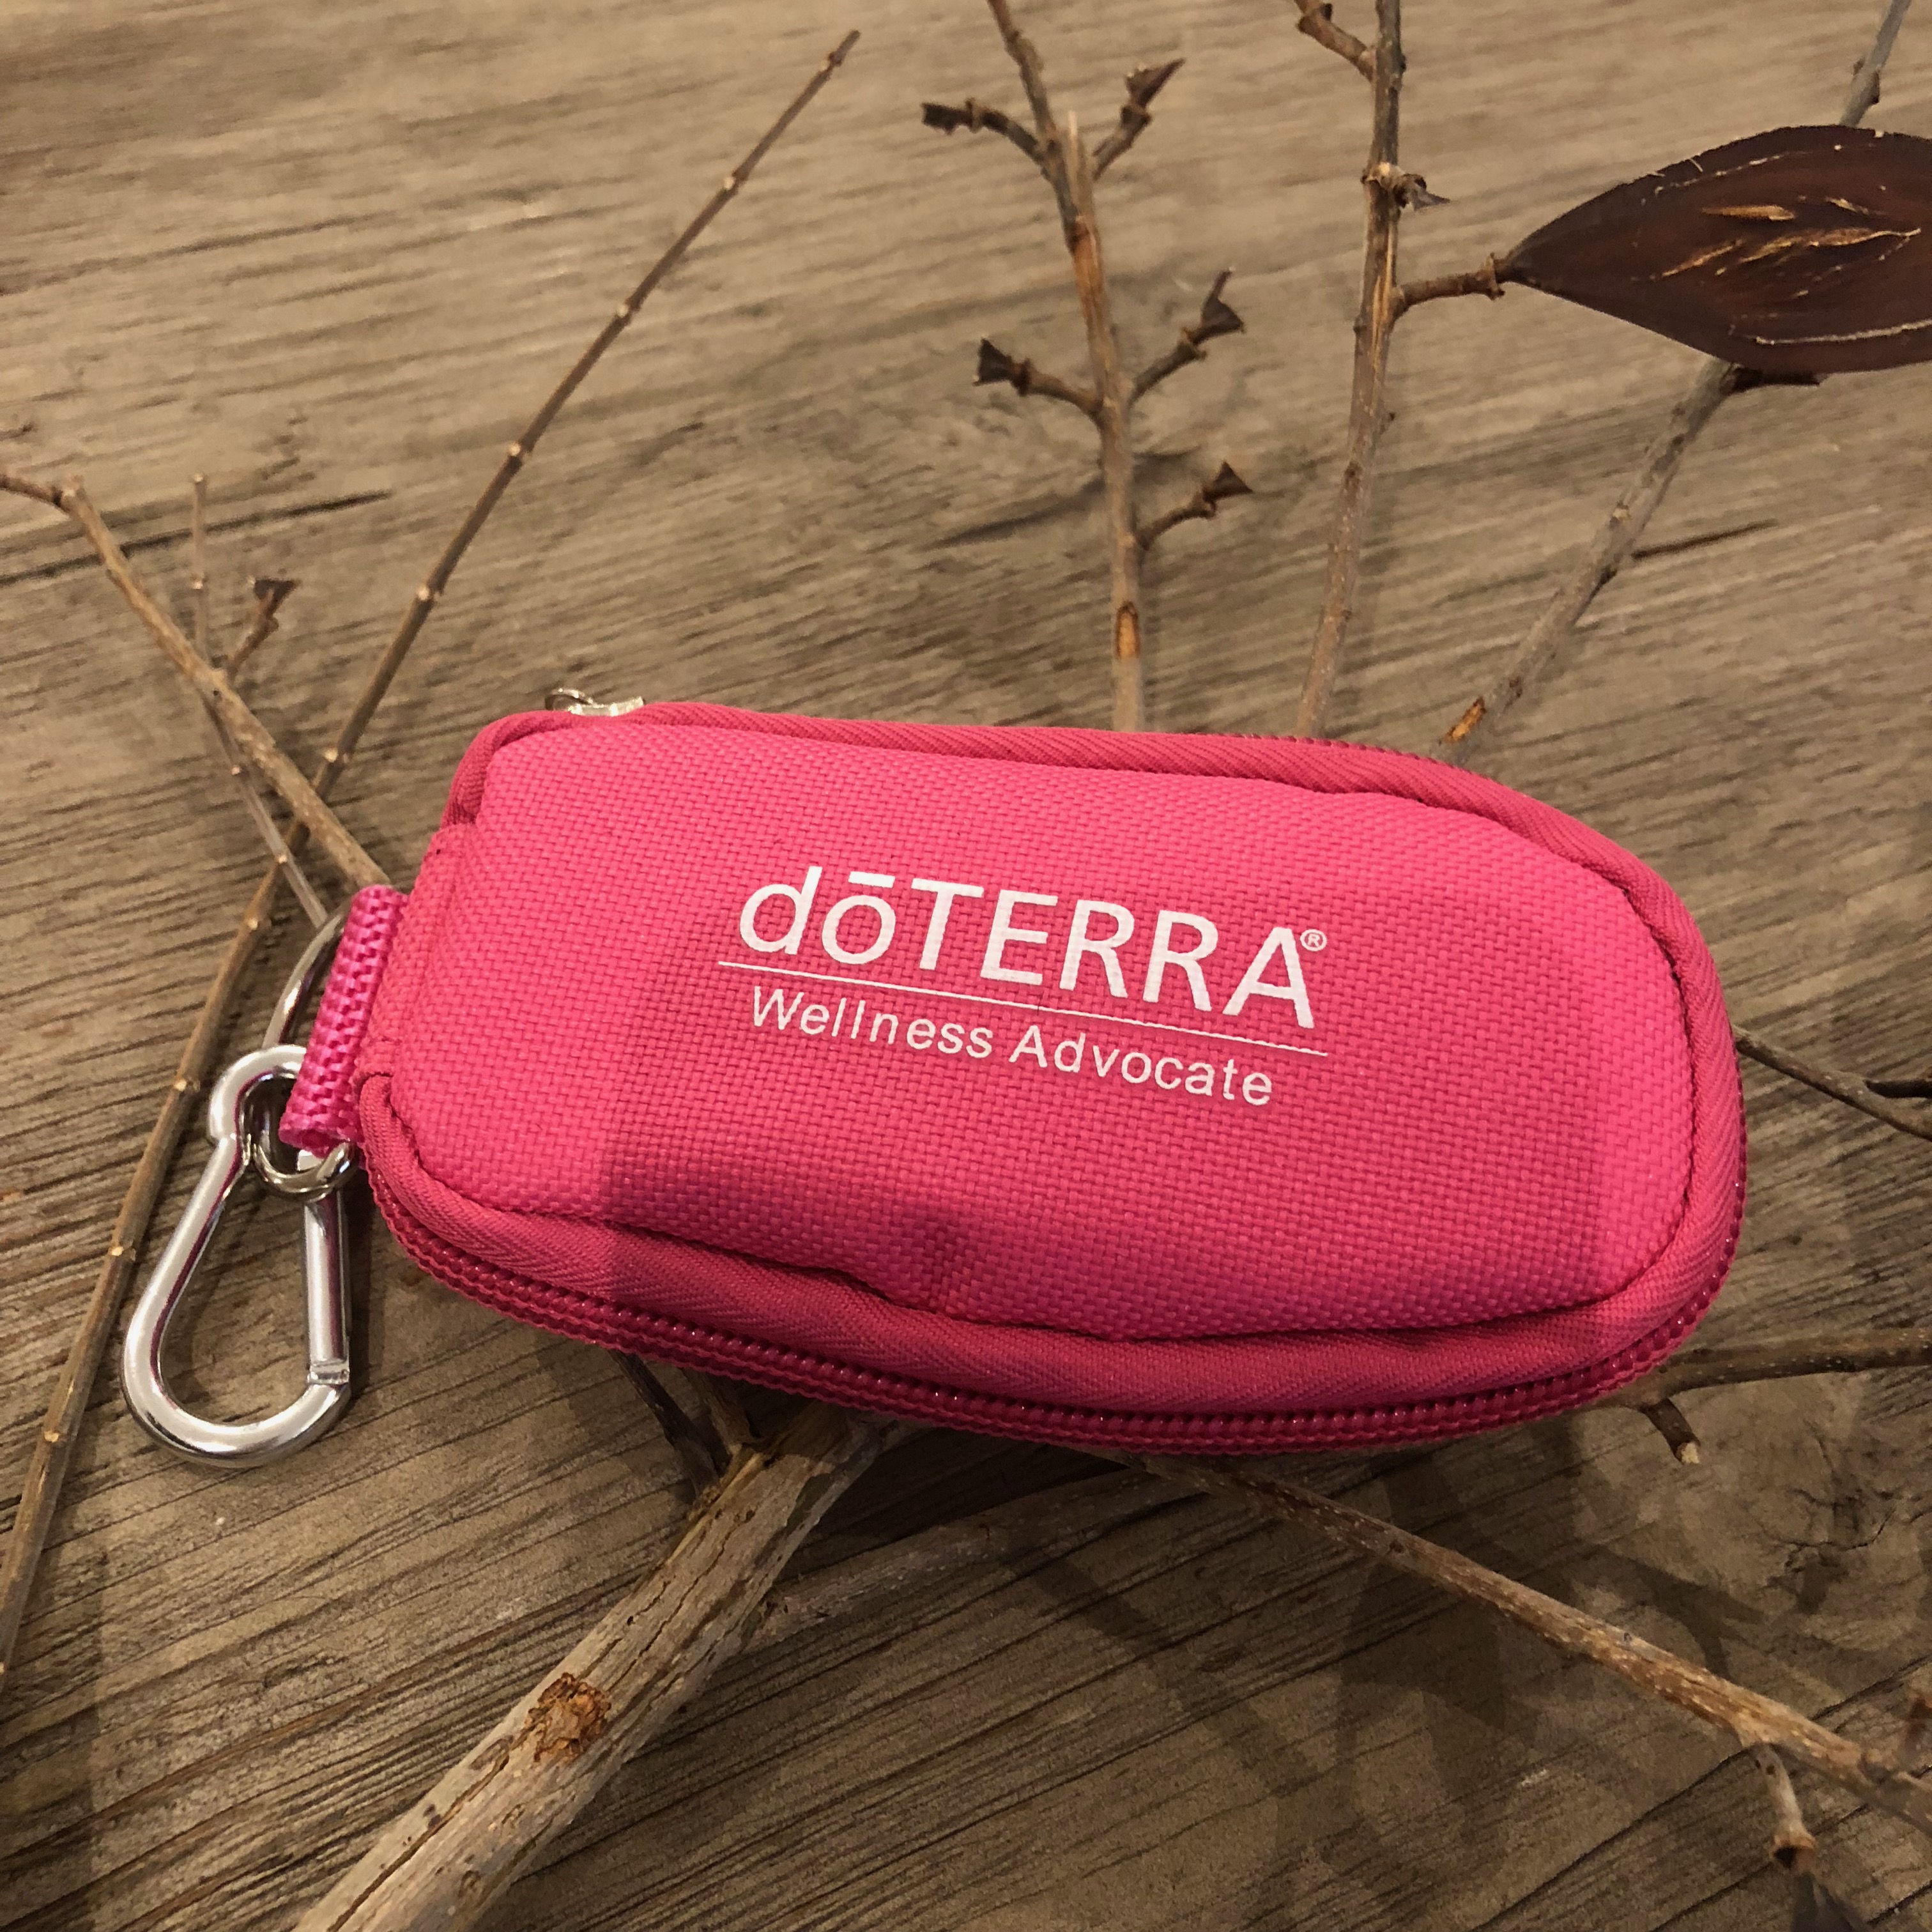 Doterra key chain pink